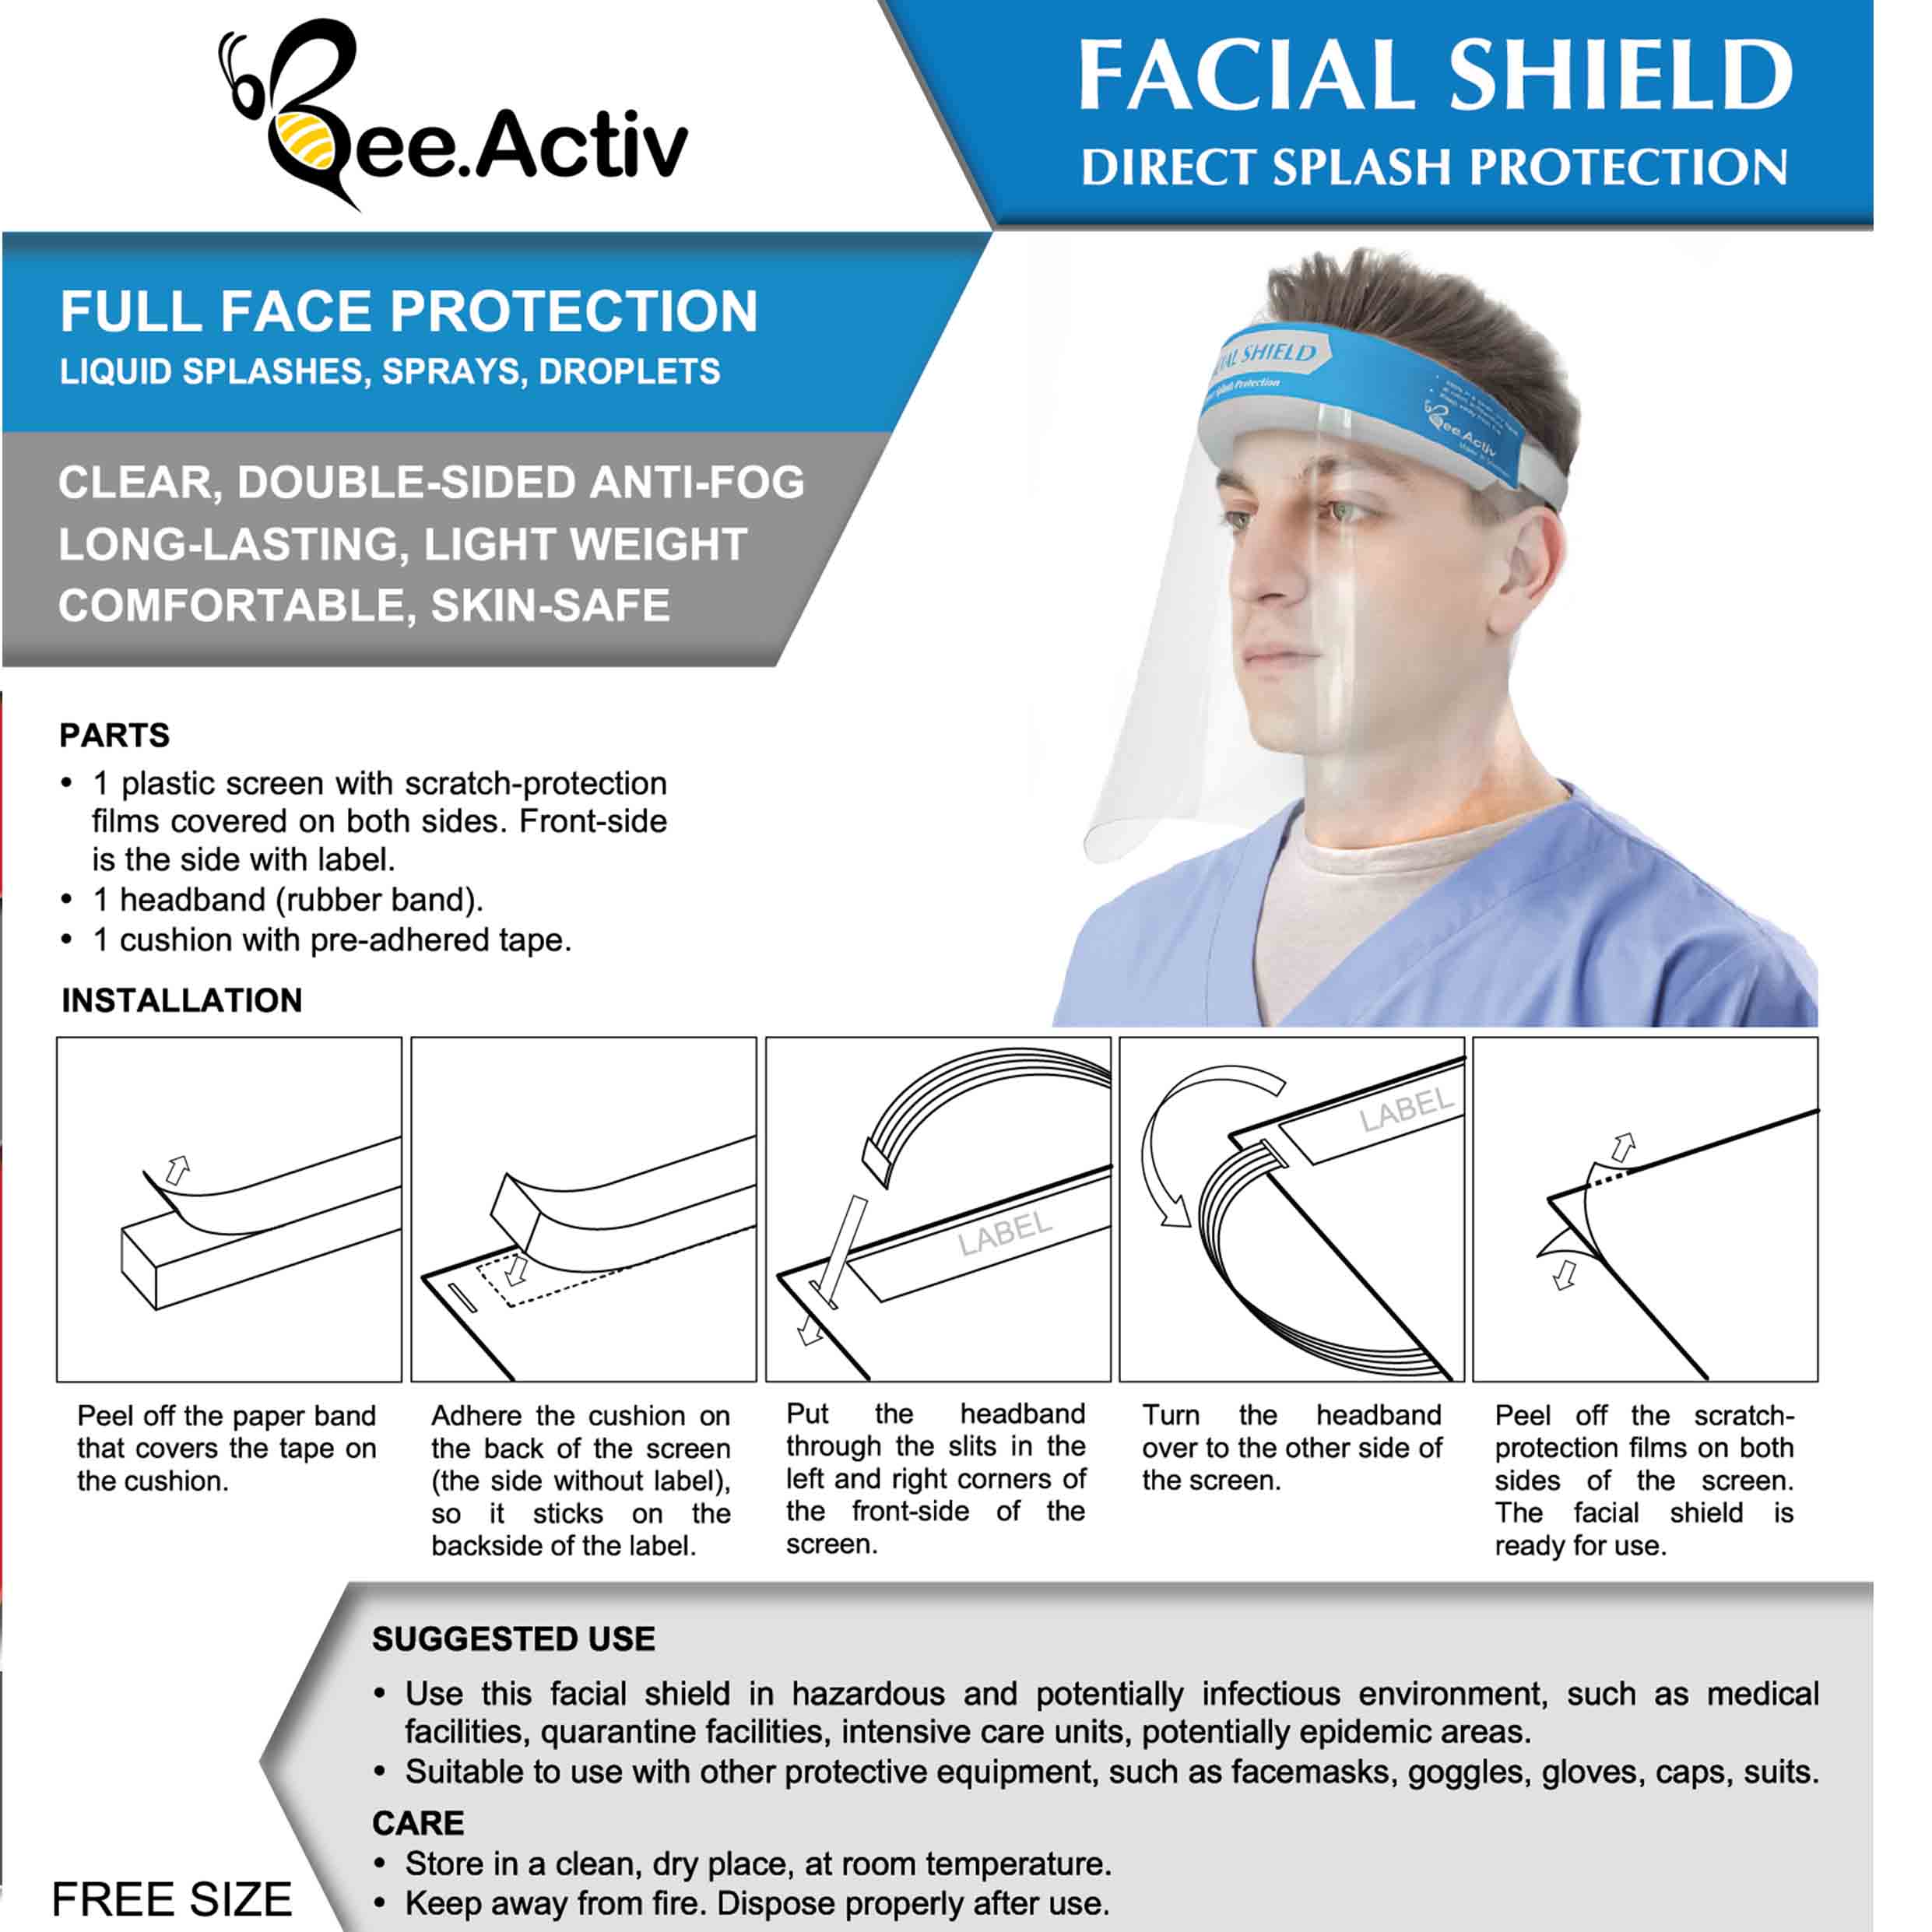 Facial shield – direct splash protection